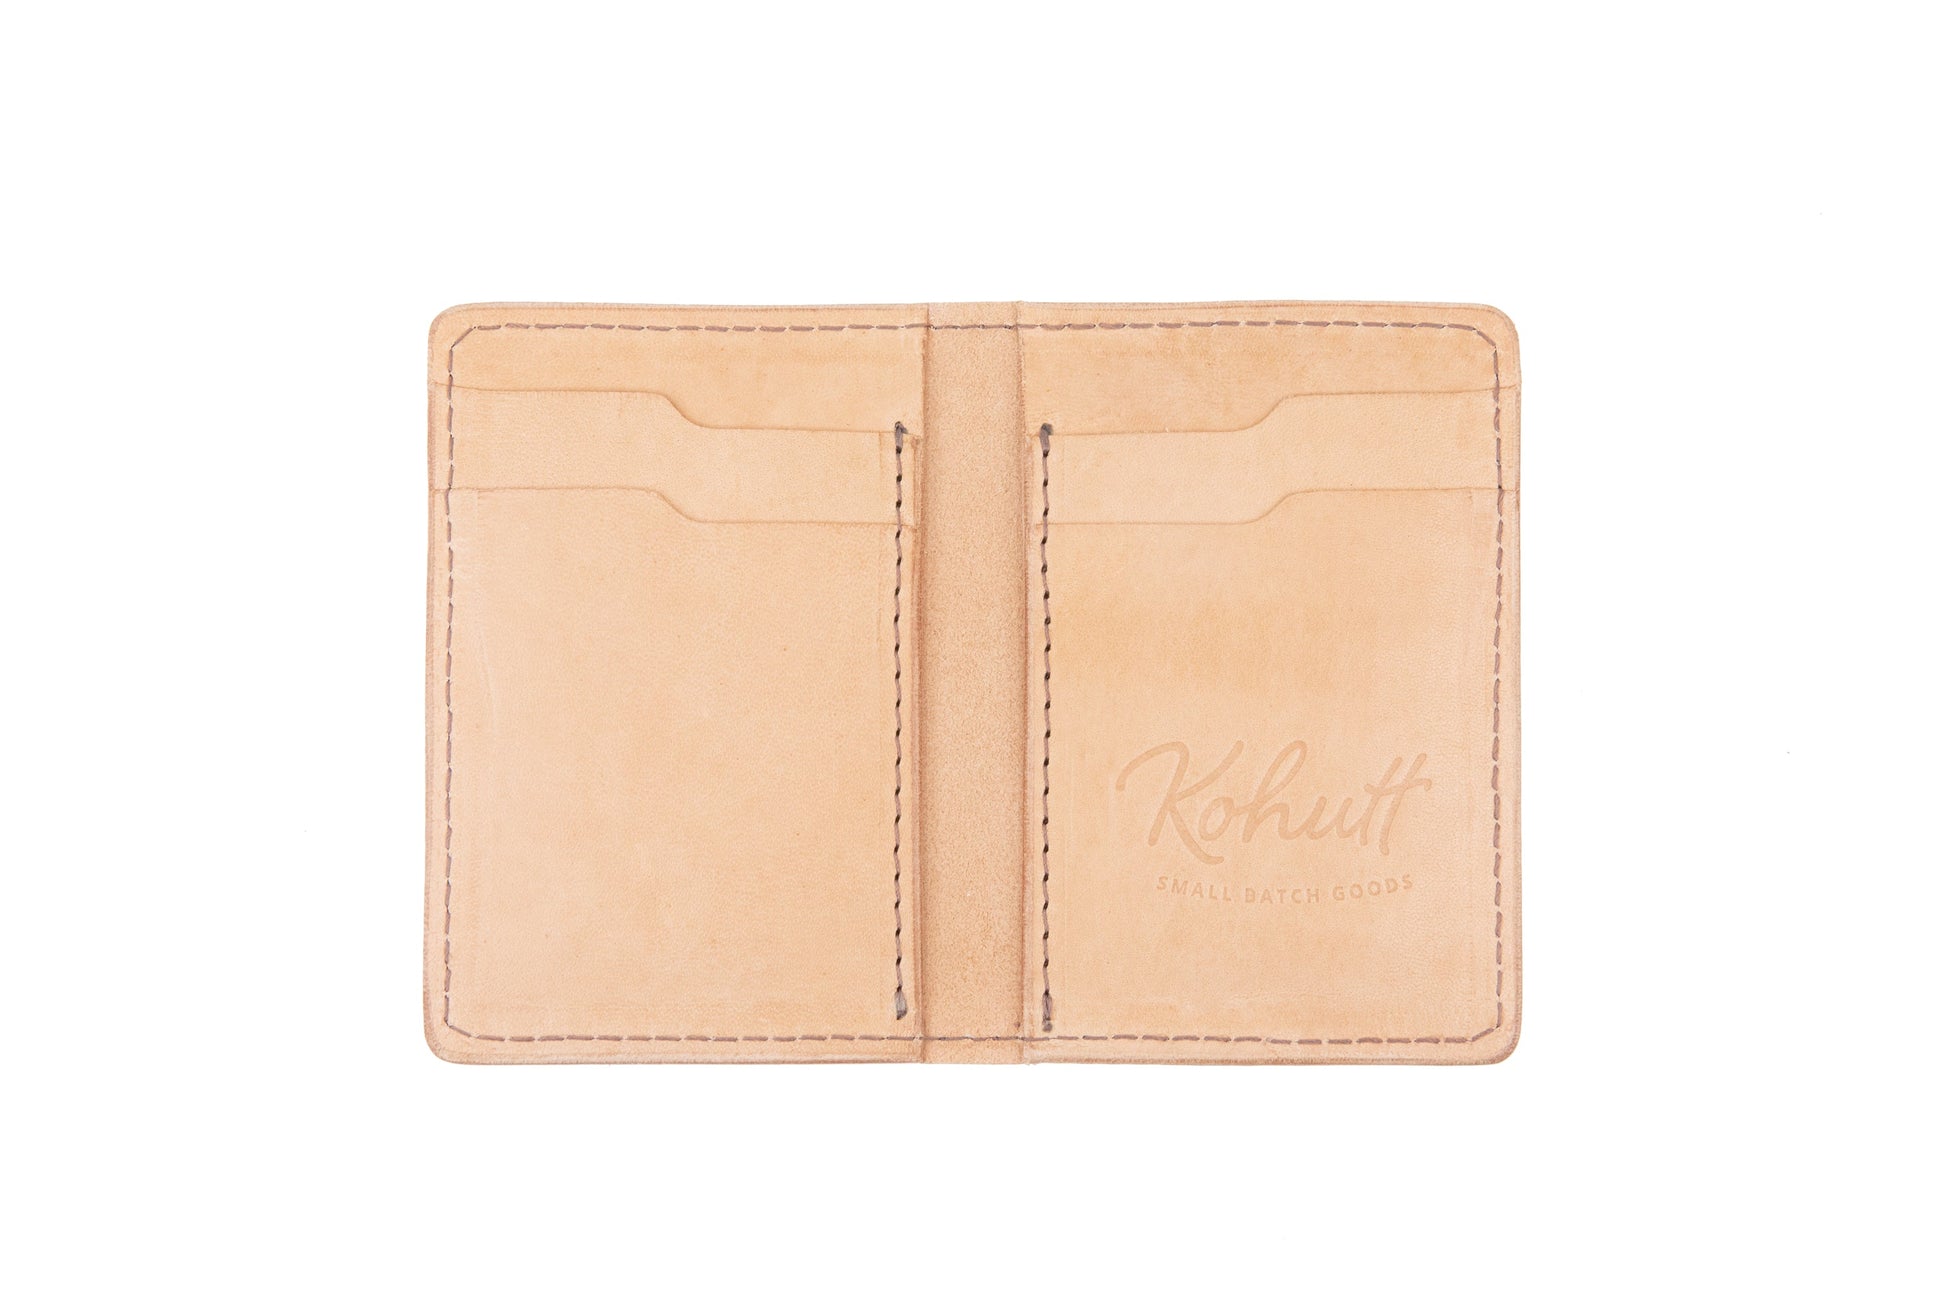 Classic vertical bifold slim wallet in natural Kangaroo leather - Kohutt™ - made in Tasmania